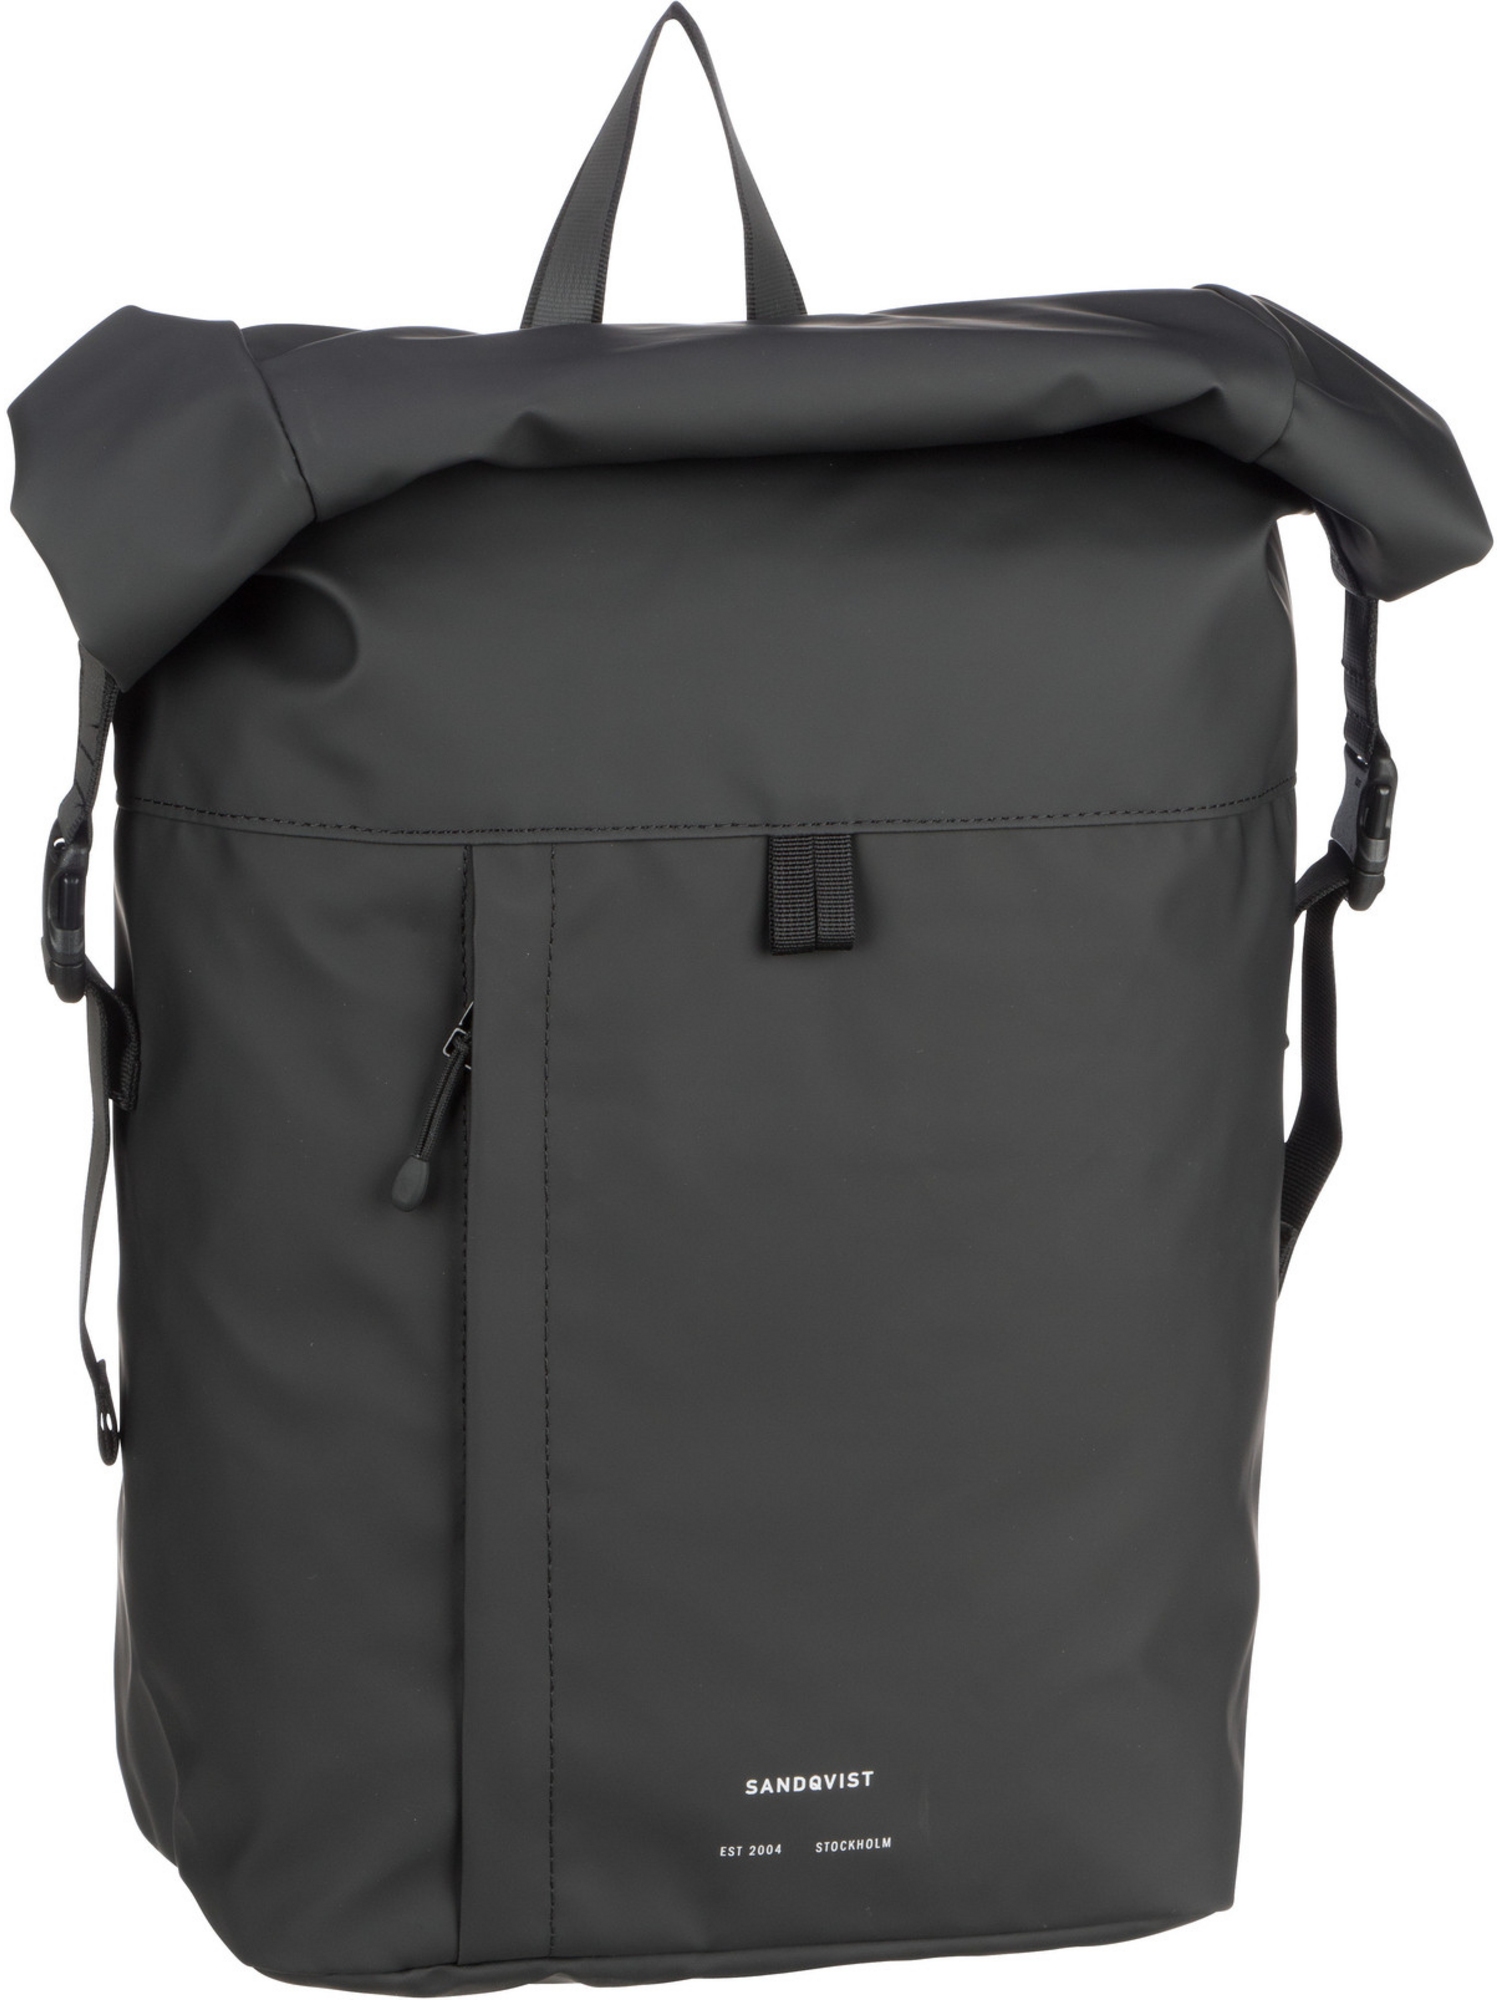 Рюкзак SANDQVIST/Backpack Konrad Backpack, черный sandqvist konrad